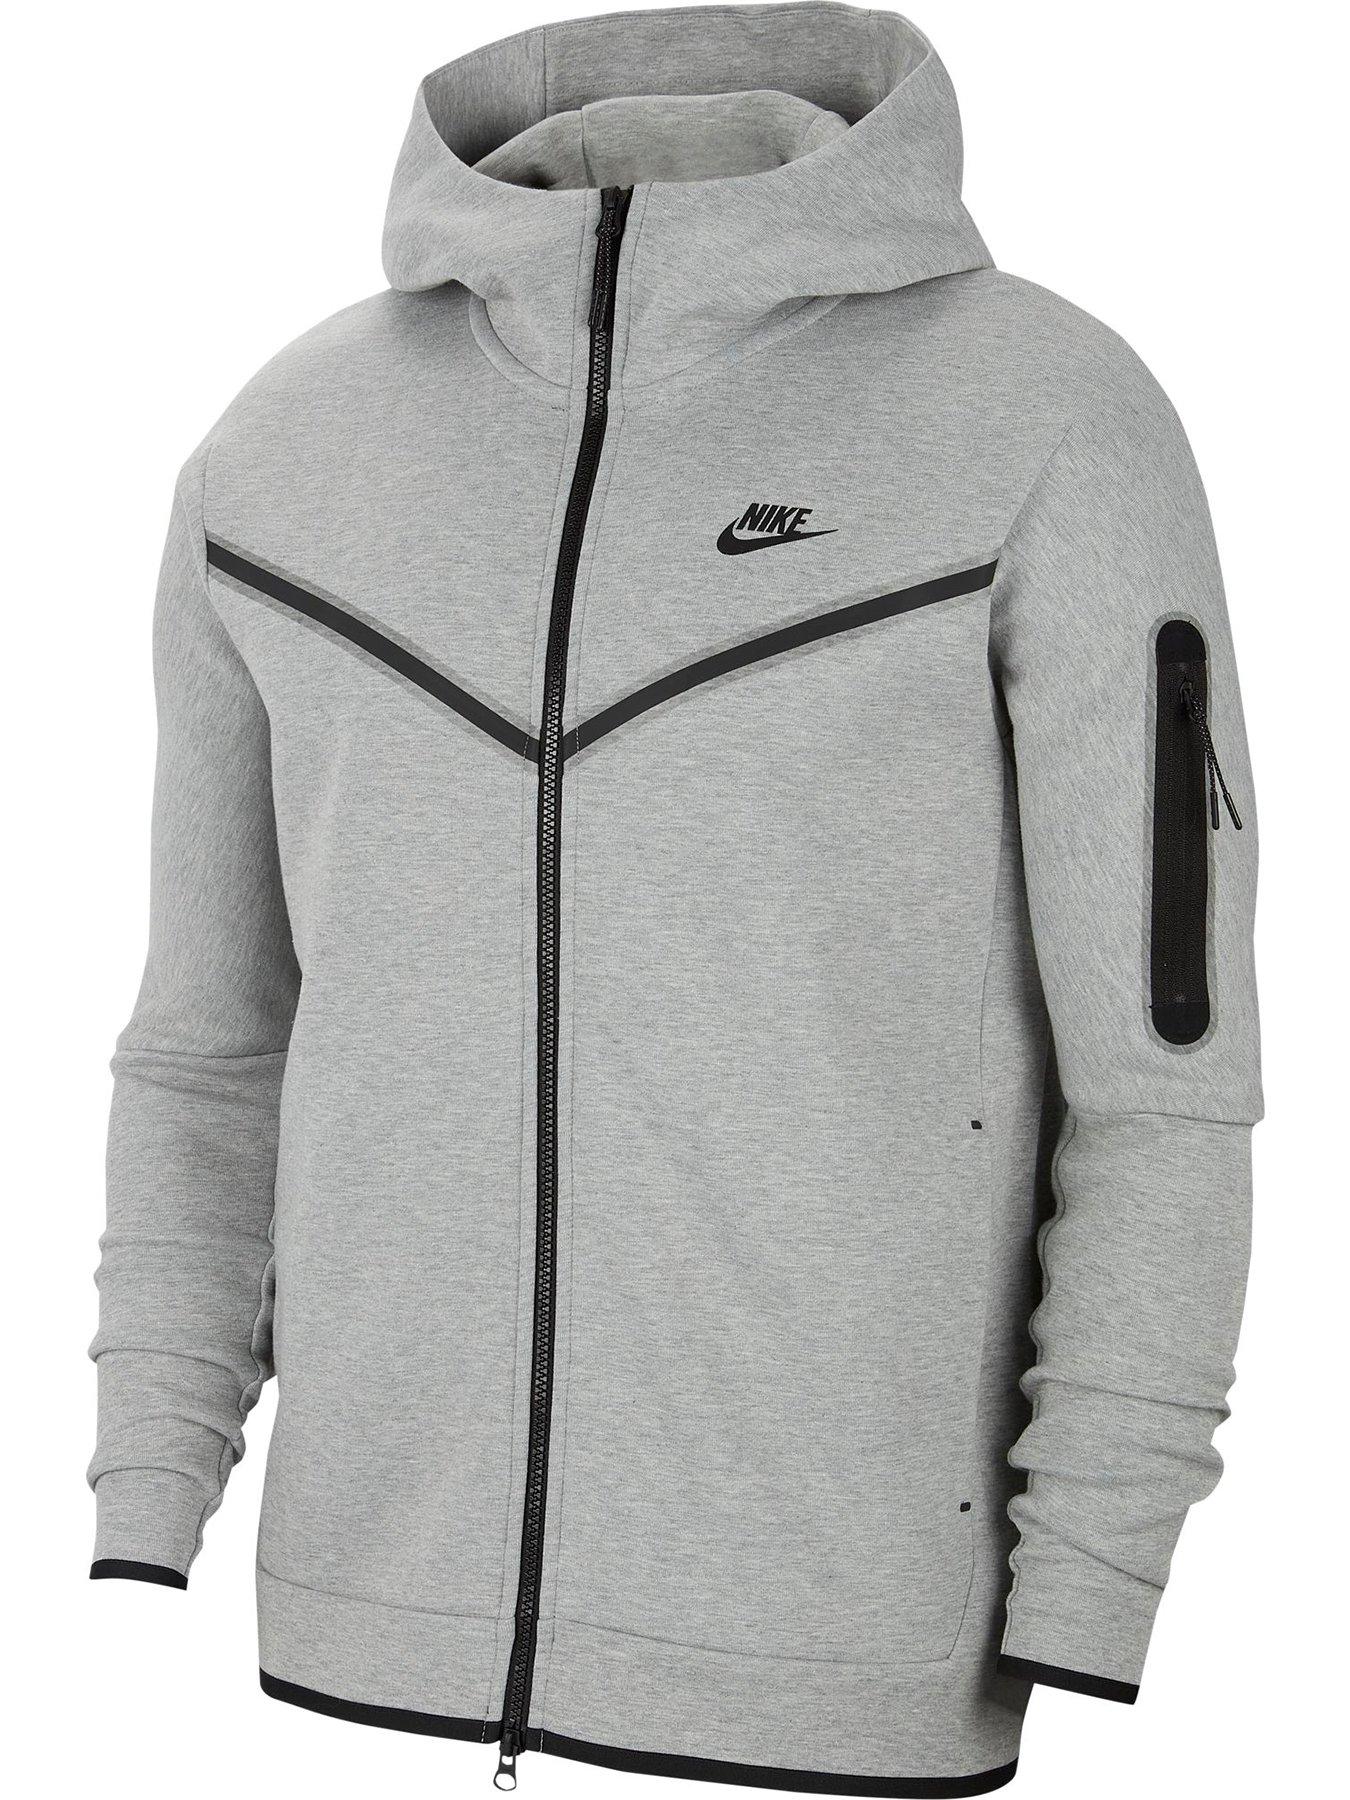 nike tech fleece hoodie grey and white